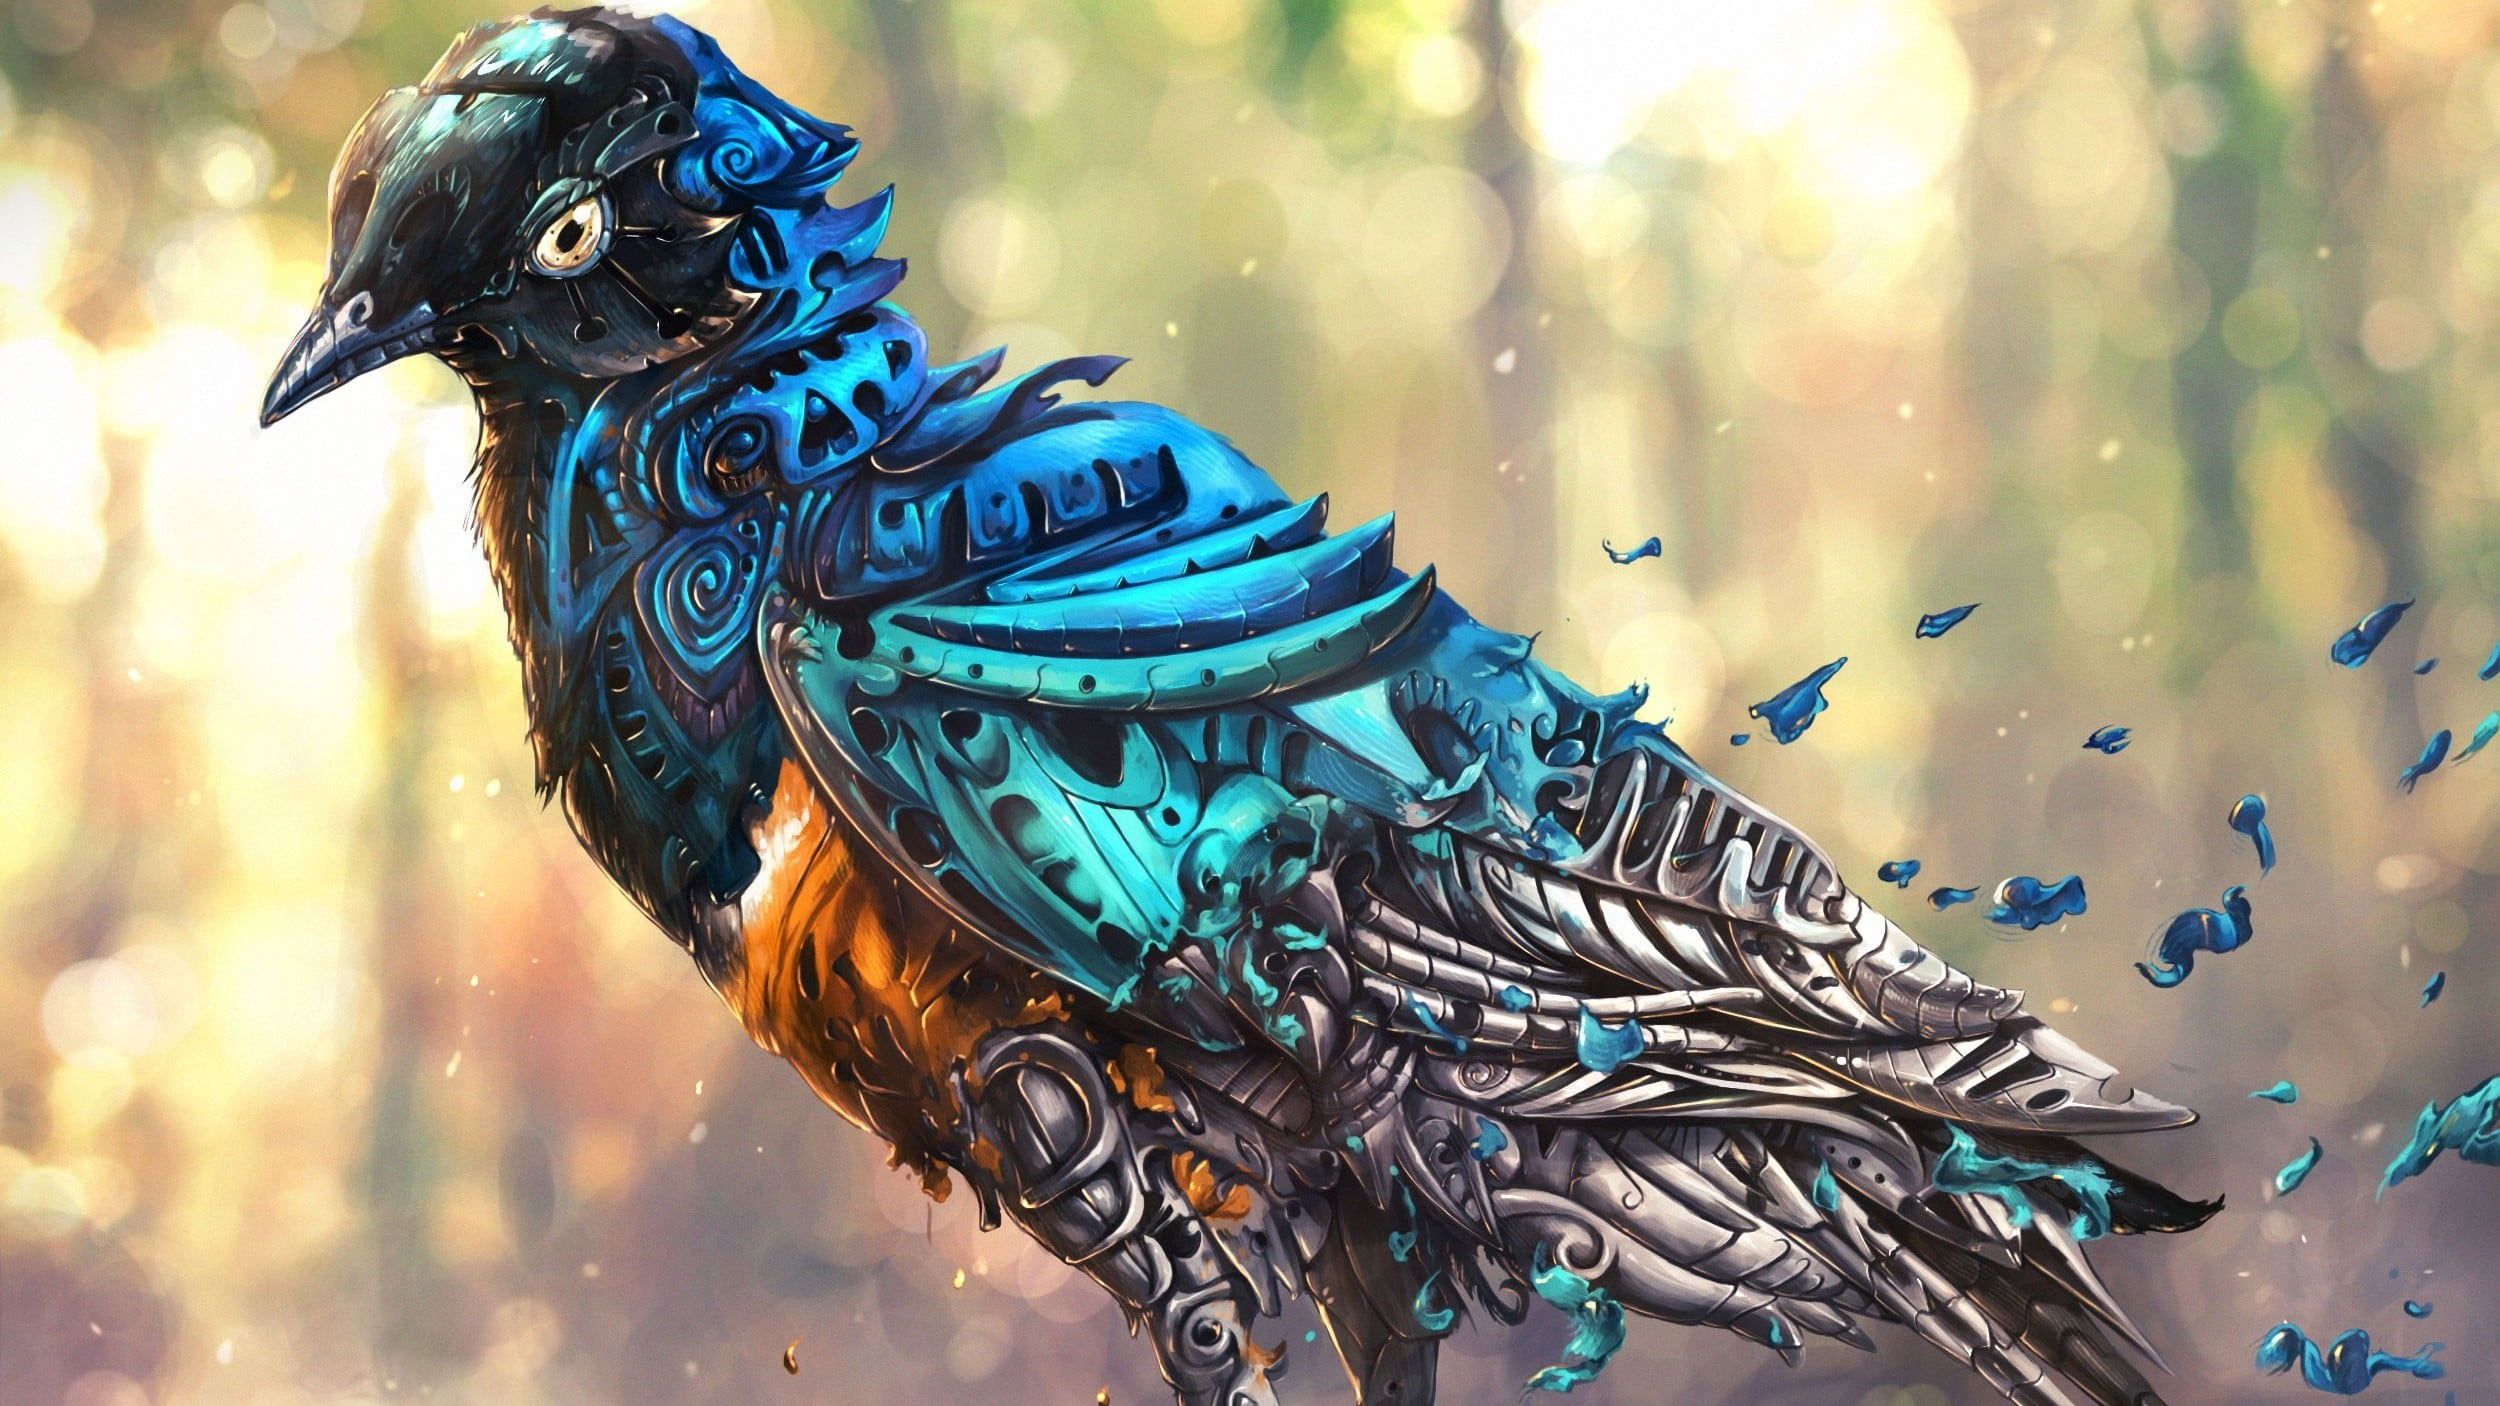 Fantasy art wallpaper, blue and white bird illustration, artwork, digital art